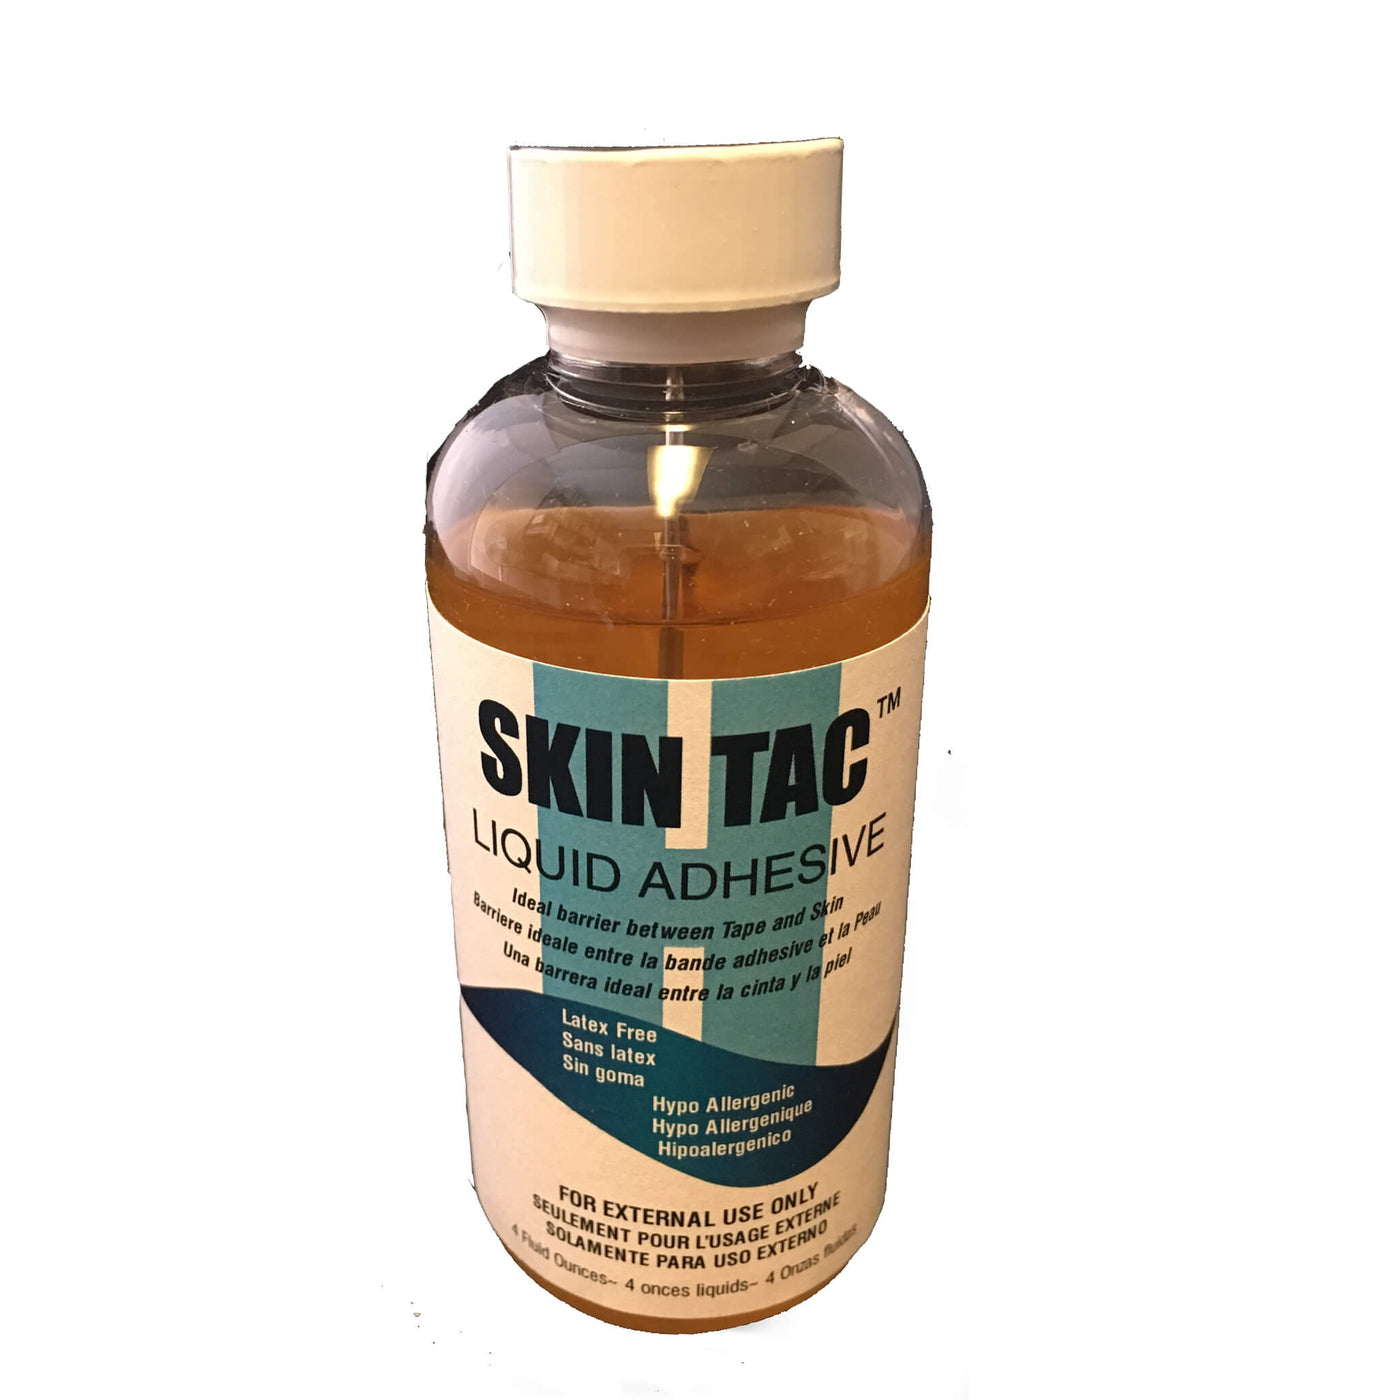 Skin Tac Liquid Adhesive at Meridian Medical Supply